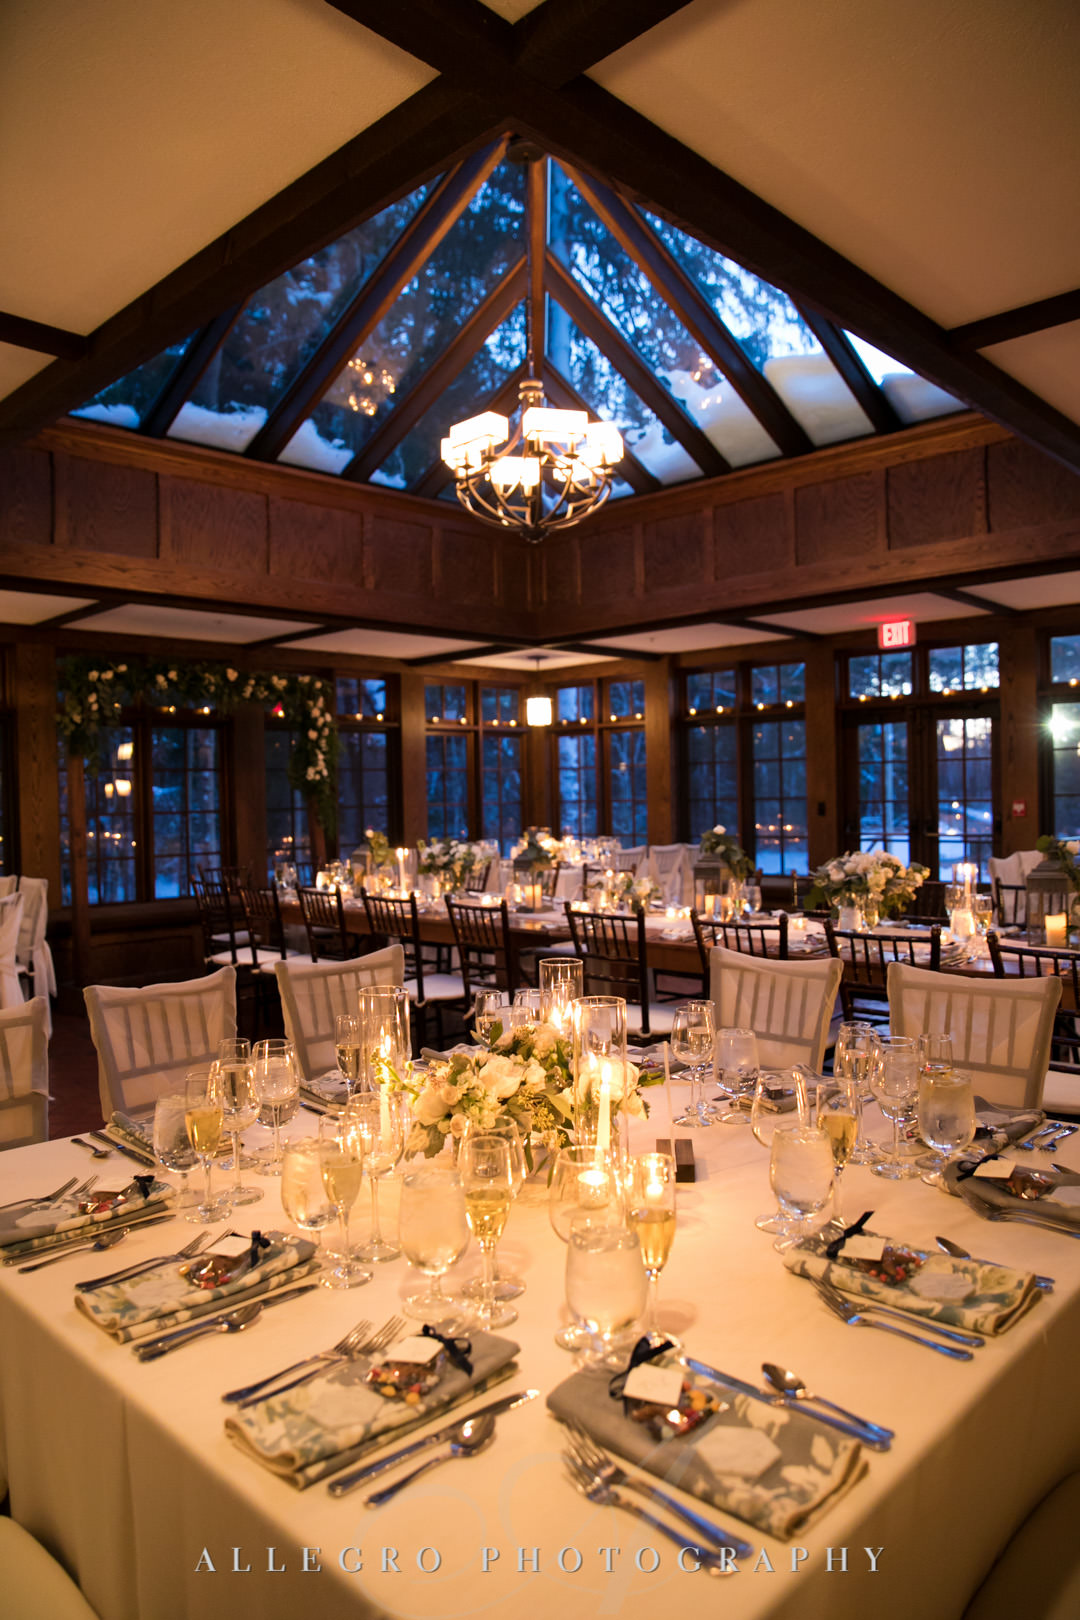 Elegant wedding place settings under evening skylight